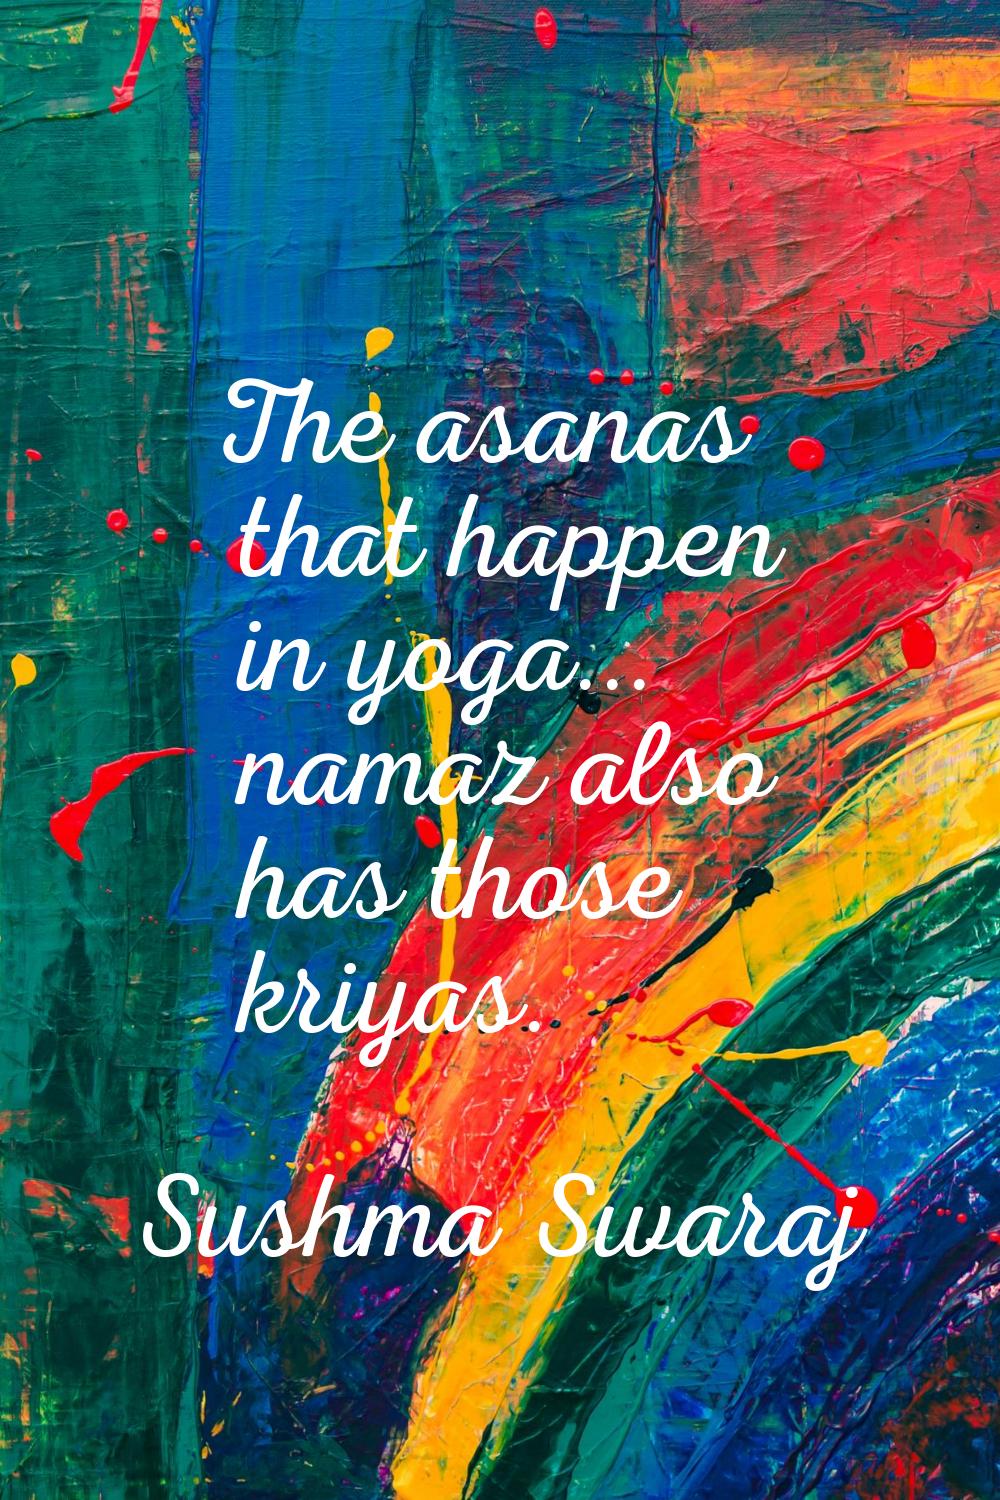 The asanas that happen in yoga... namaz also has those kriyas.